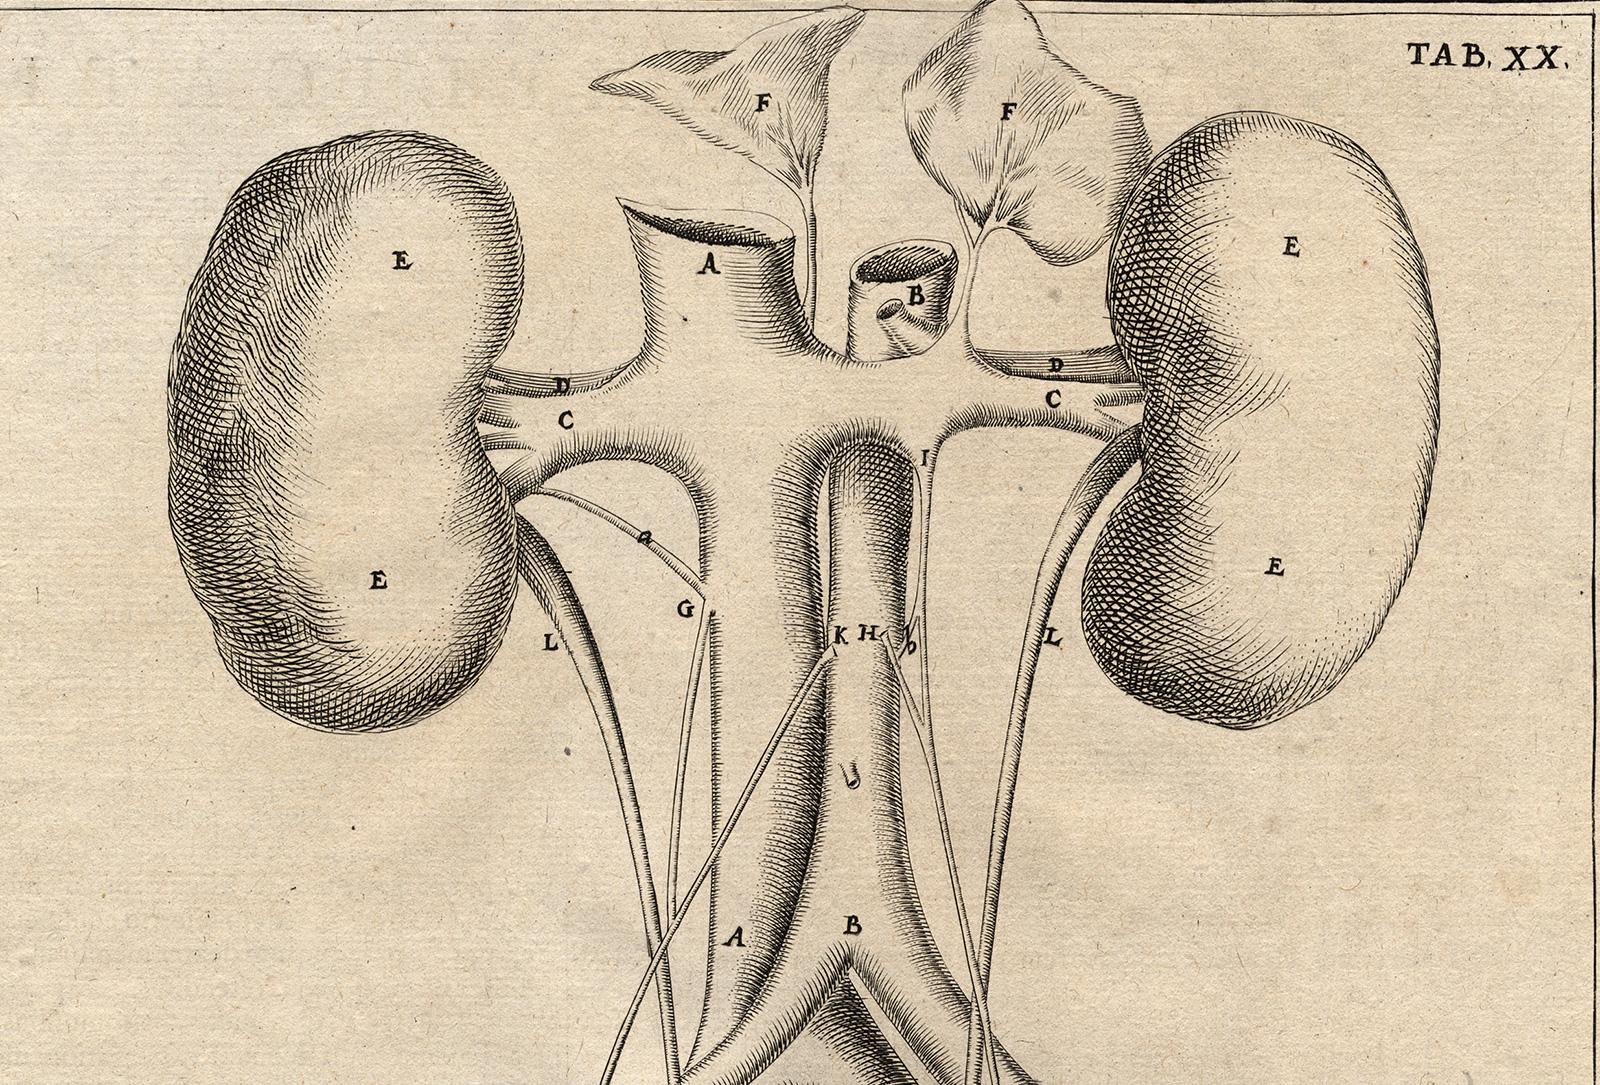 2 anatomical prints - Female organs by Spigelius - Engraving - 17th century - Old Masters Print by Adrianus Spigelius